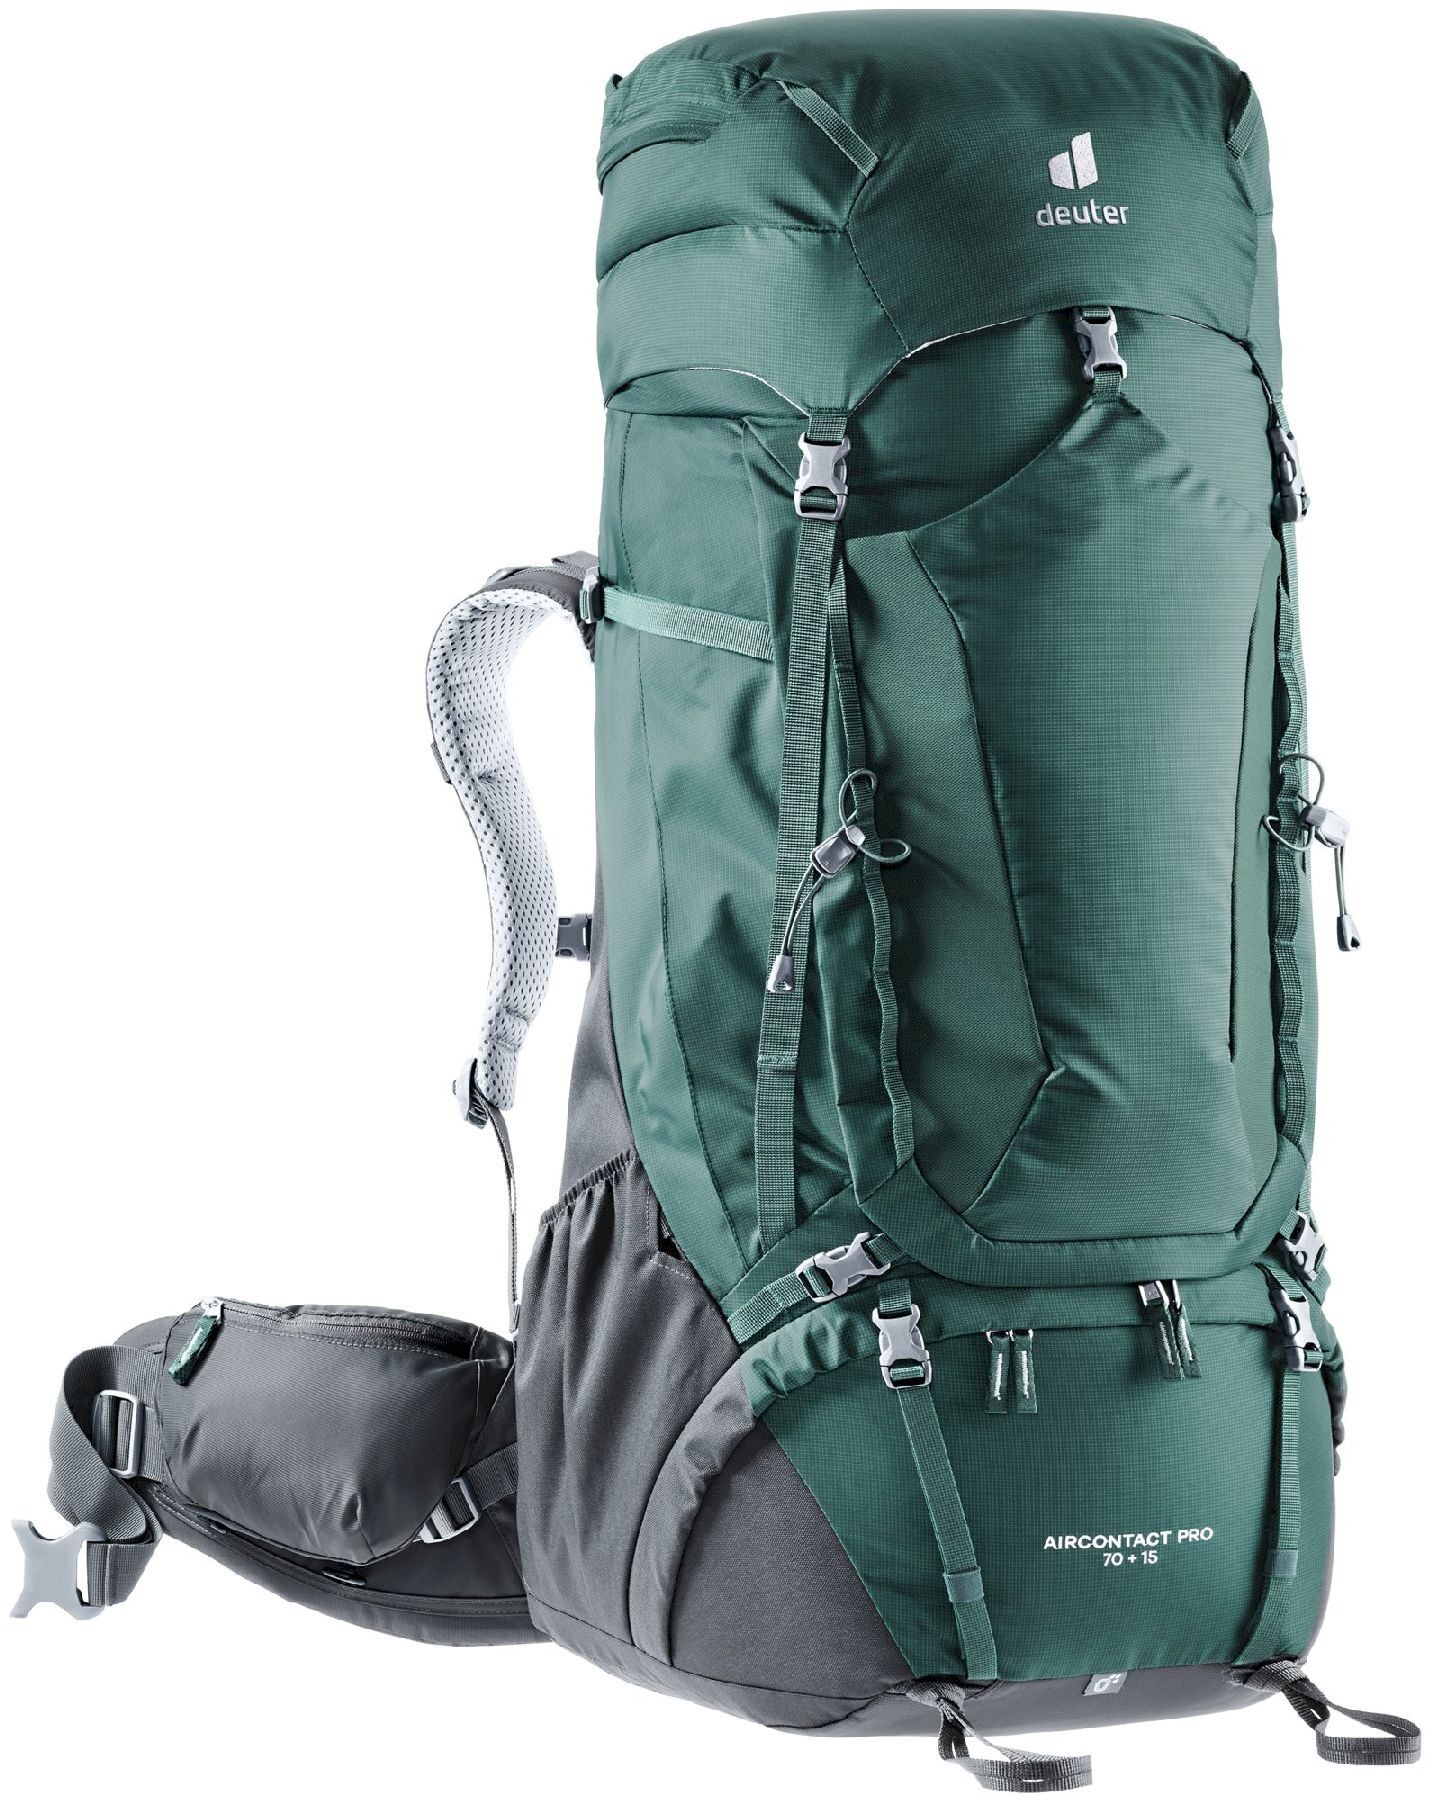 Deuter Aircontact PRO 70 + 15 - Hiking backpack - Men's